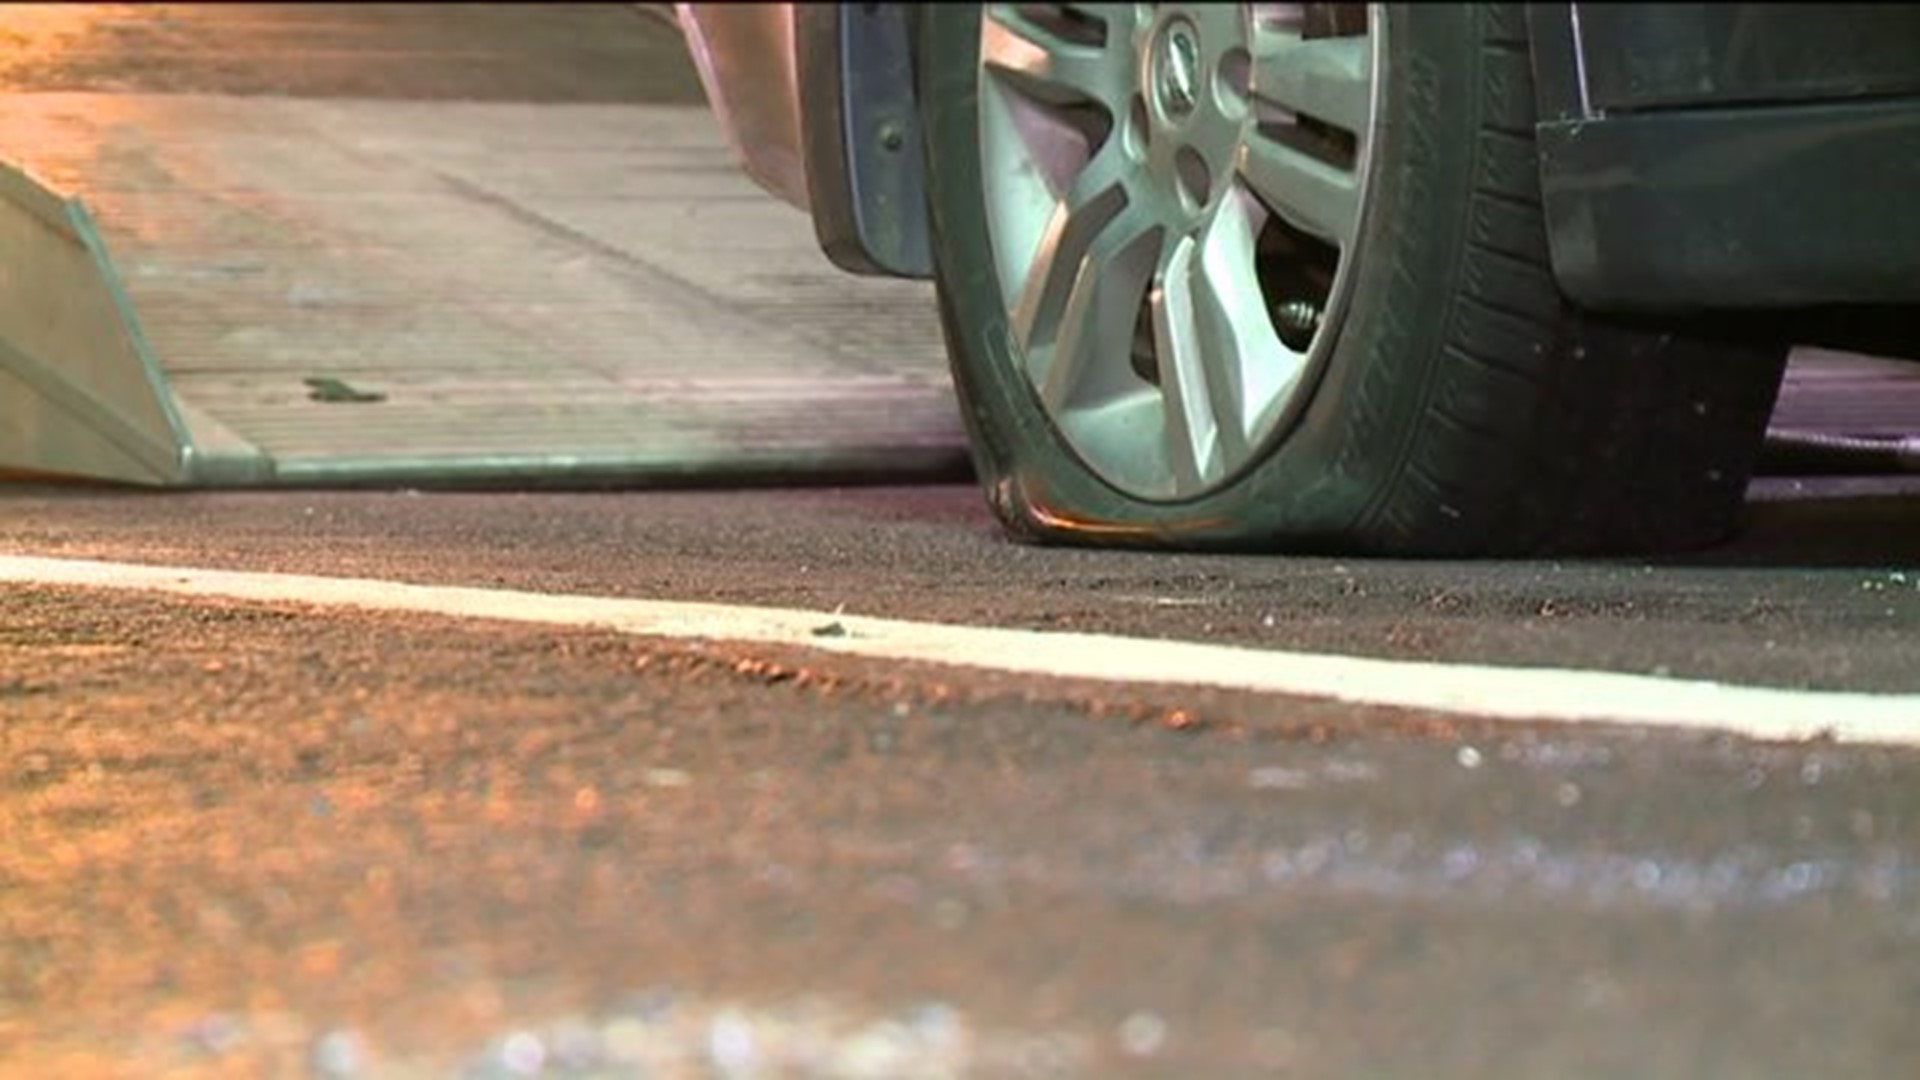 Vehicle Vandals Cause Damage in the Poconos